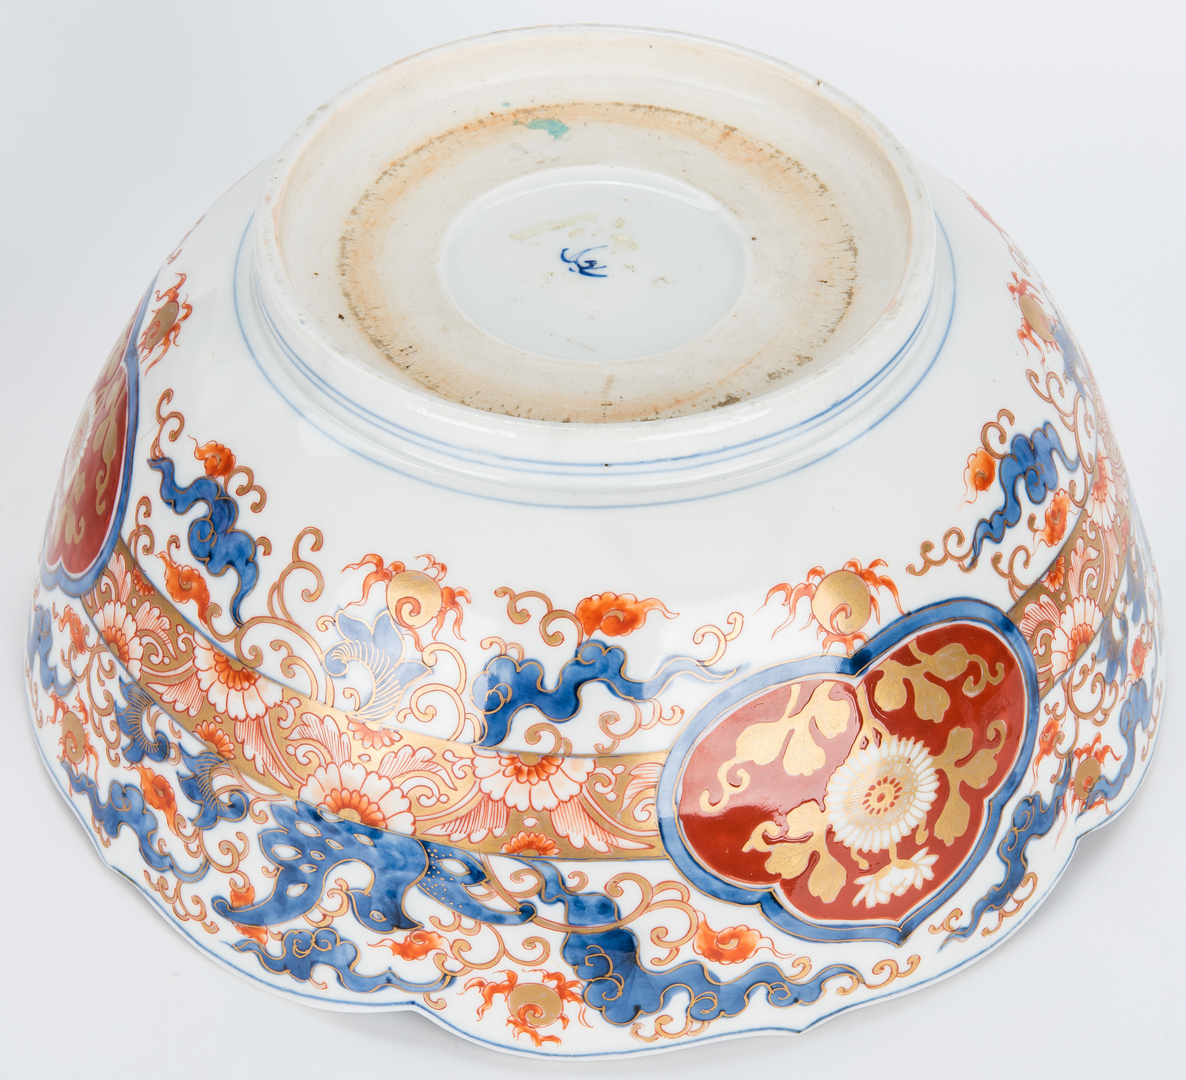 Lot 965: 2 Large Japanese Imari Porcelain Bowls